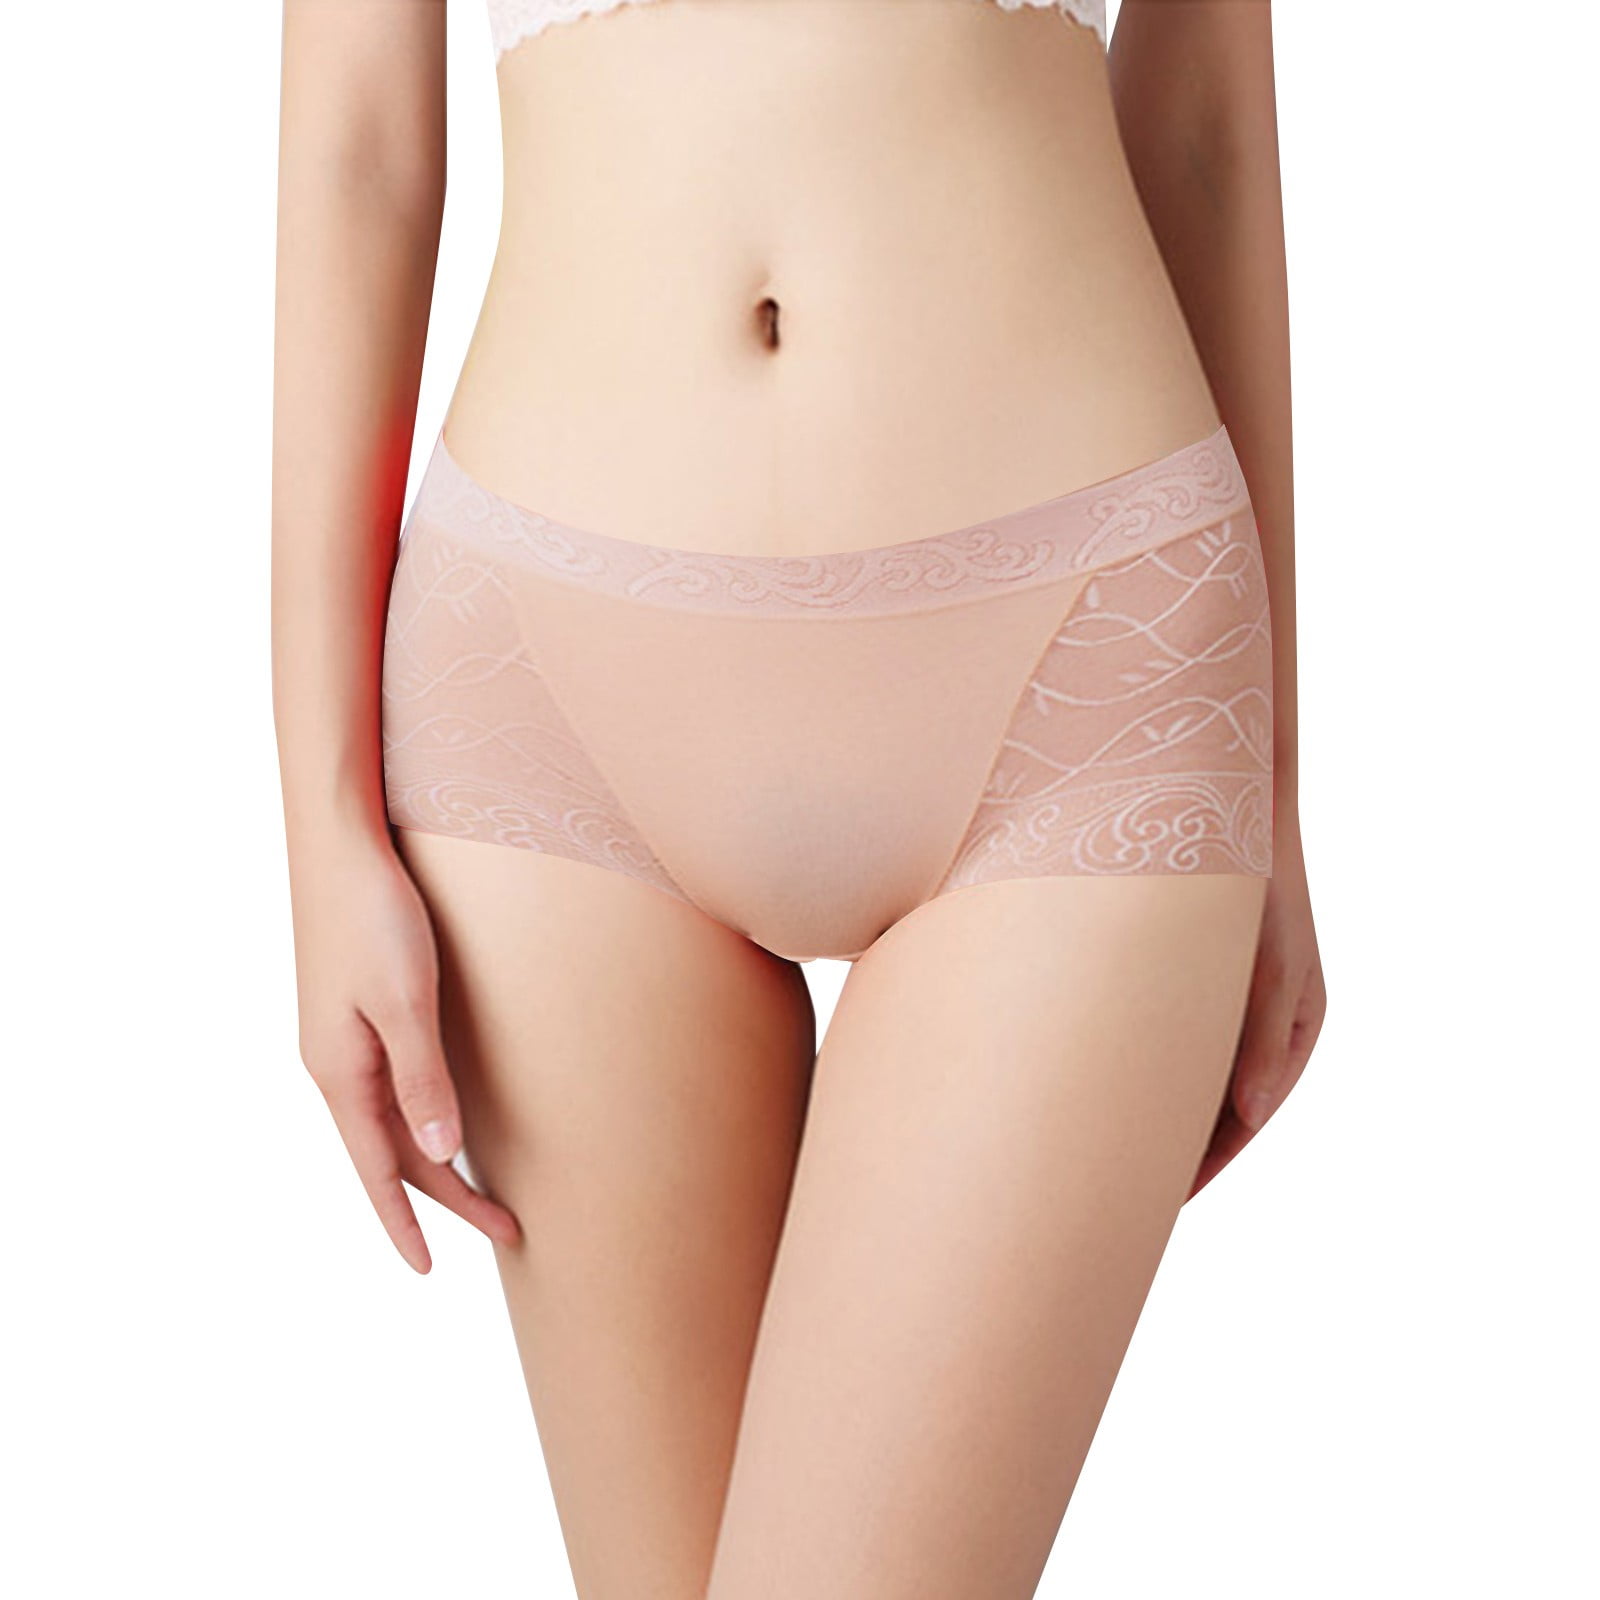 zuwimk Panties For Women,Women Thong Cotton Panty Low Cut Seamless Underwear  Khaki,XXL 